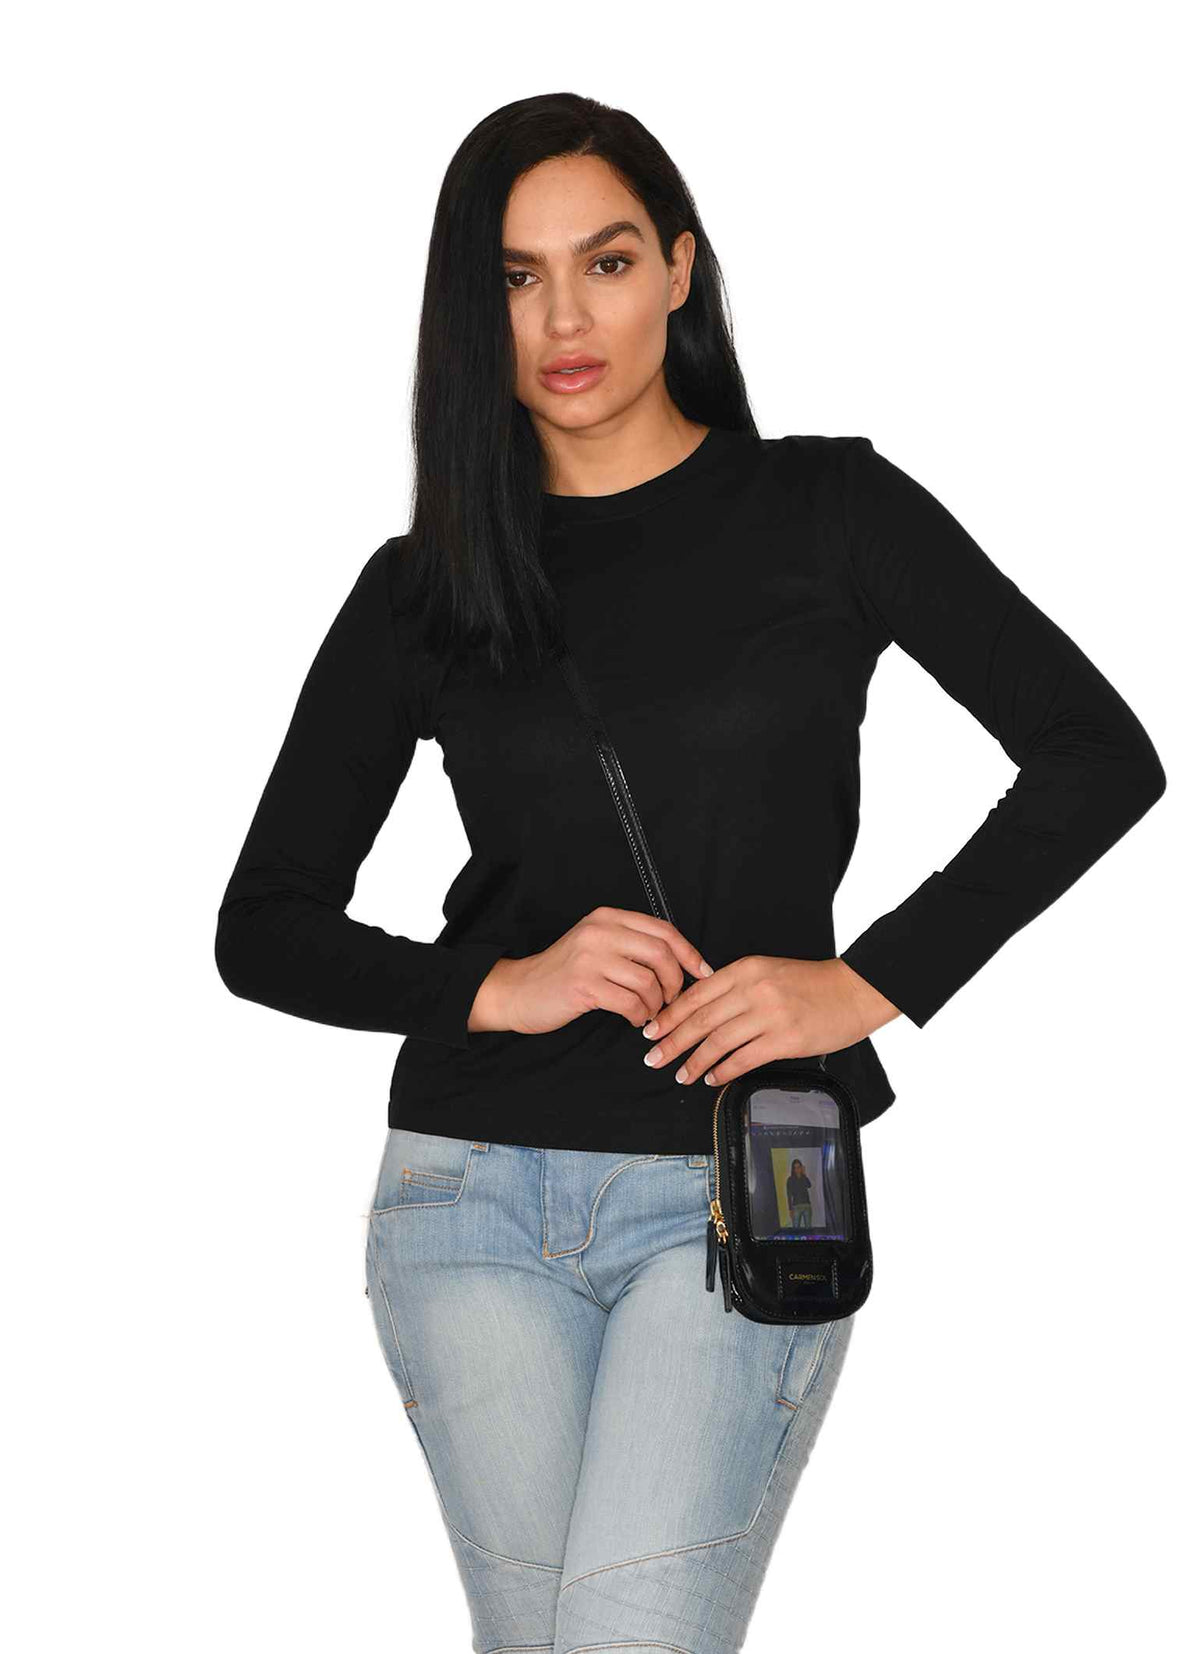 Gio smartphone holder in color black